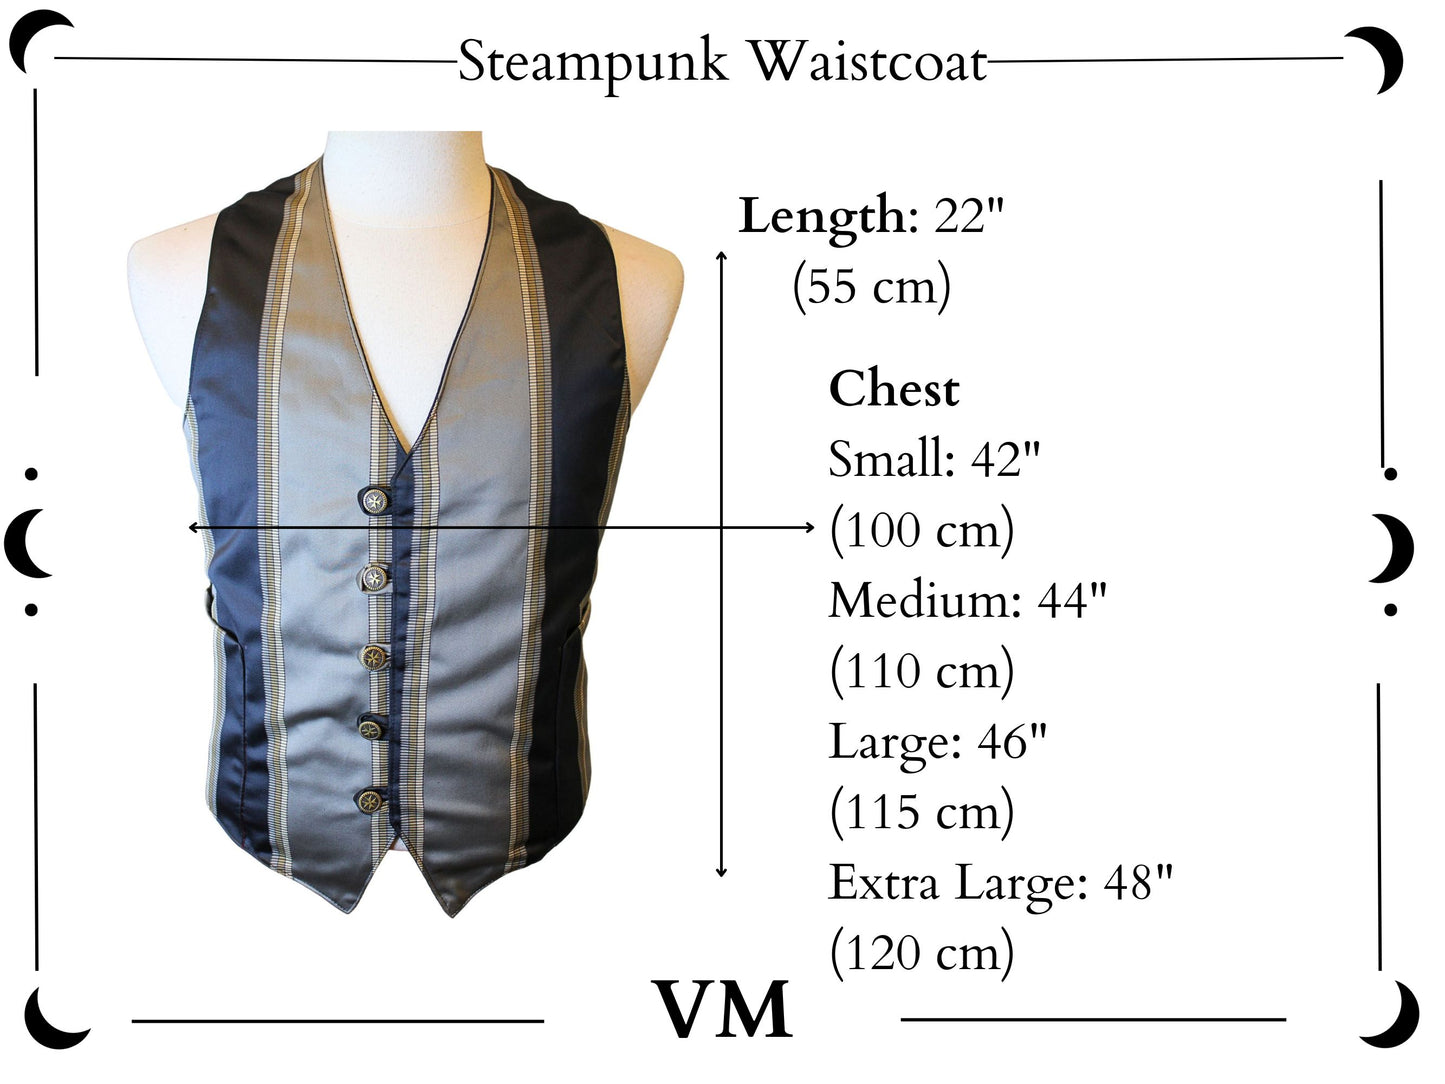 The VM Short Waistcoat